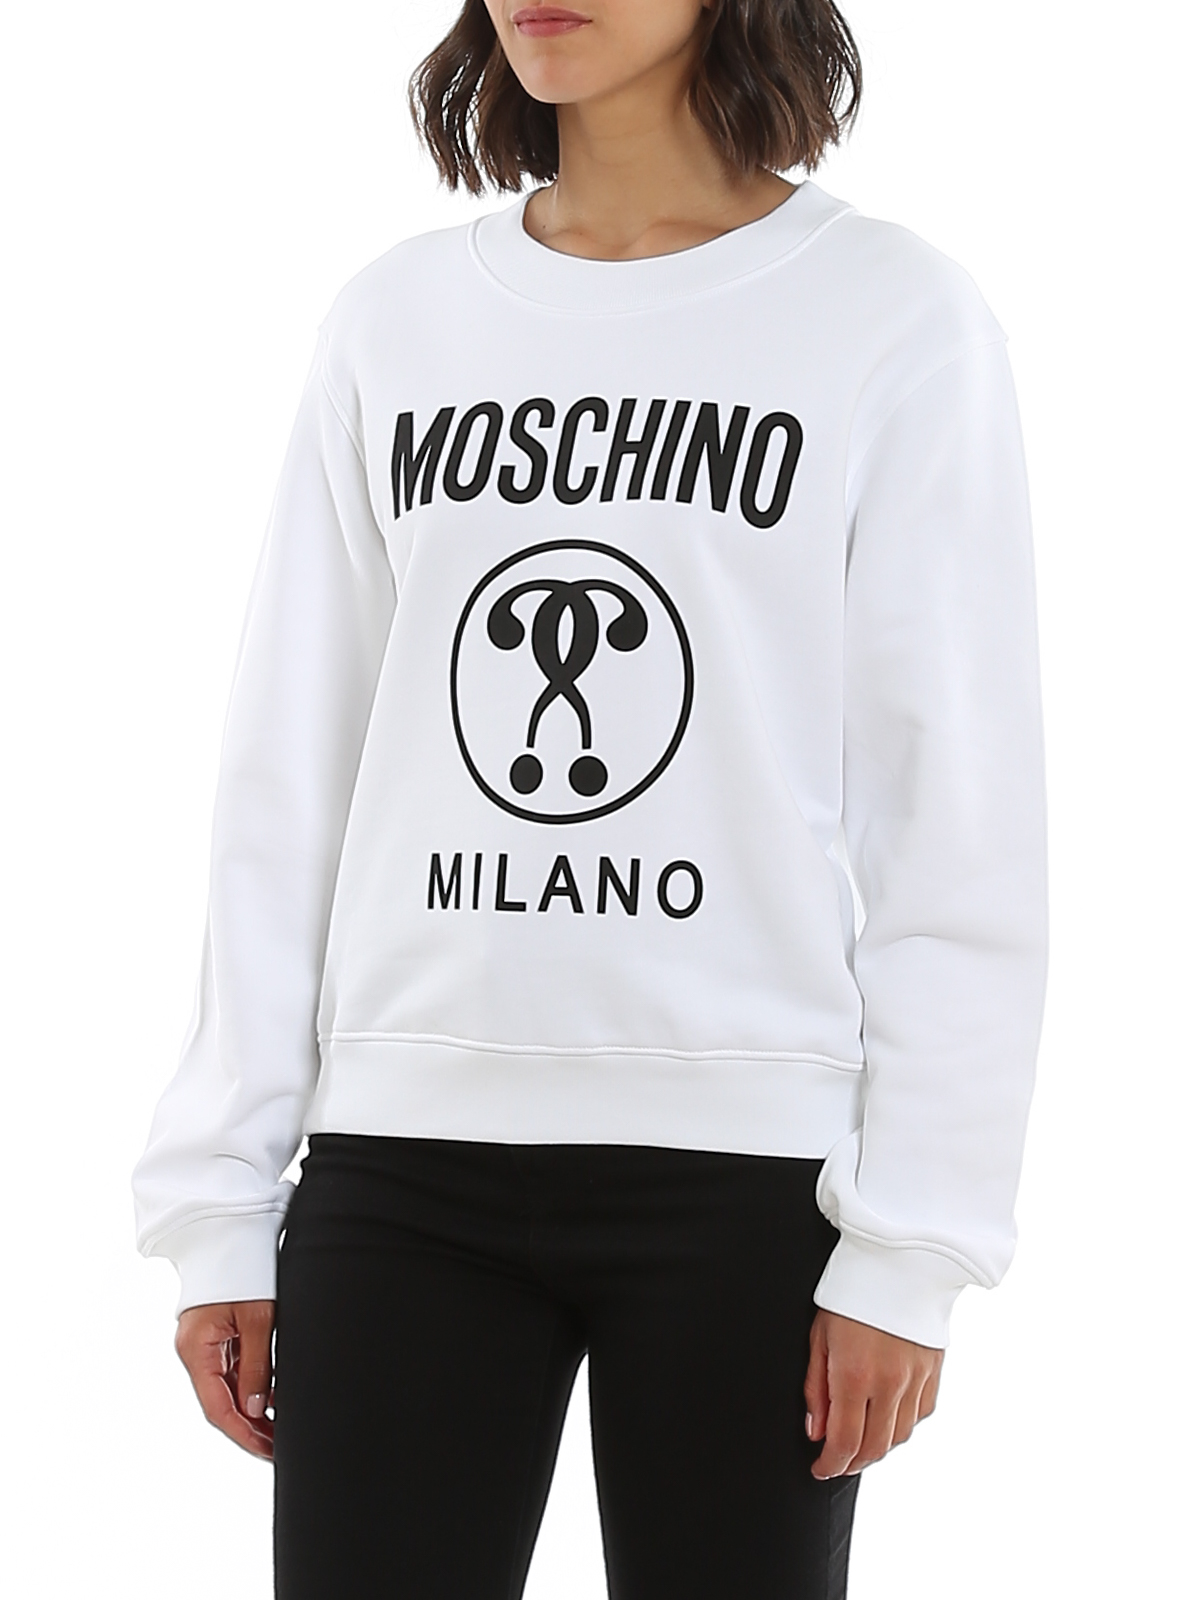 moschino question mark sweatshirt